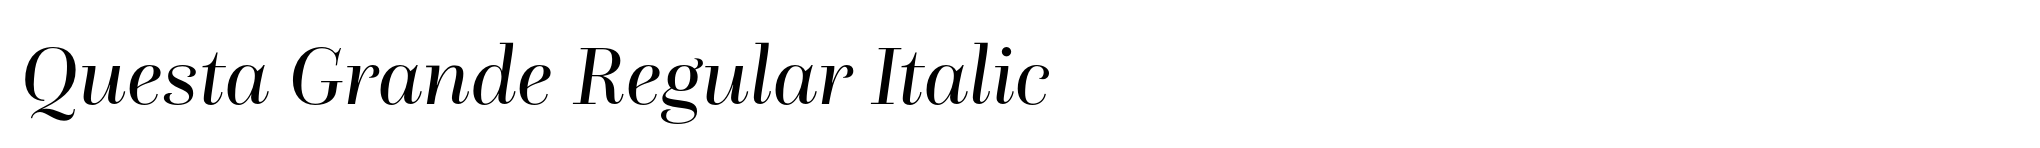 Questa Grande Regular Italic image